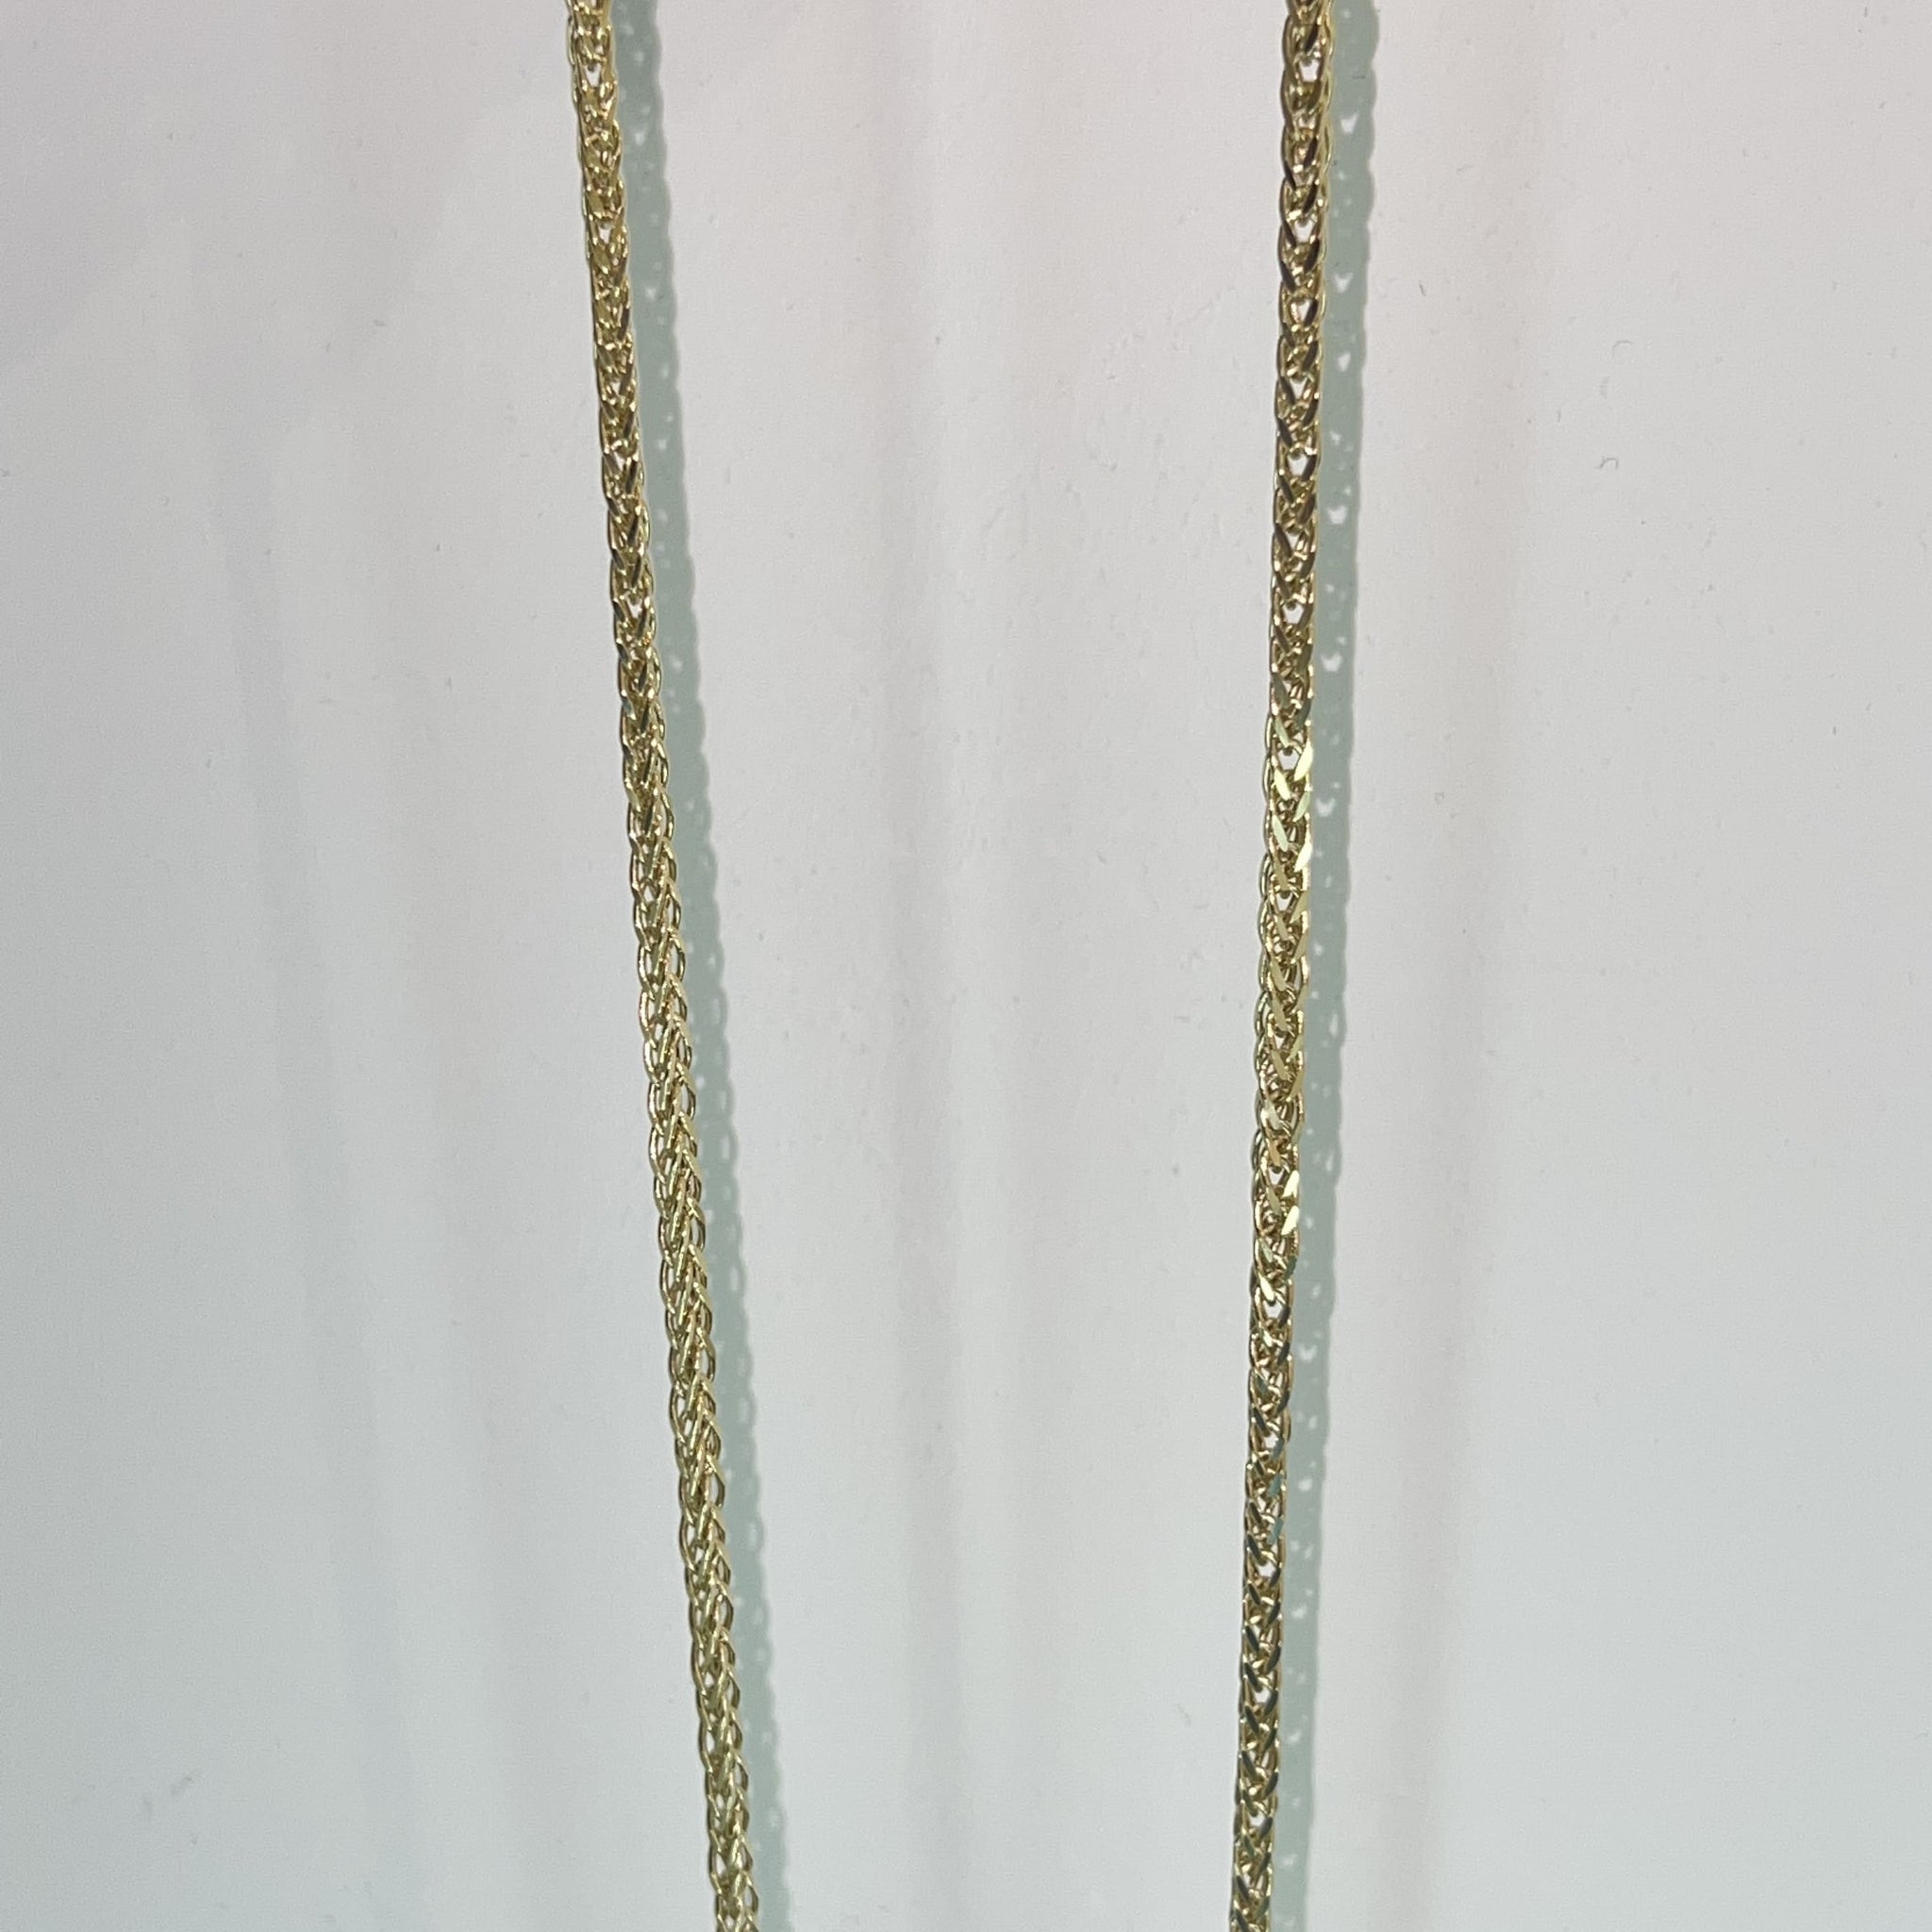 Franco chain - 14 carat gold - 65cm / 3.7mm